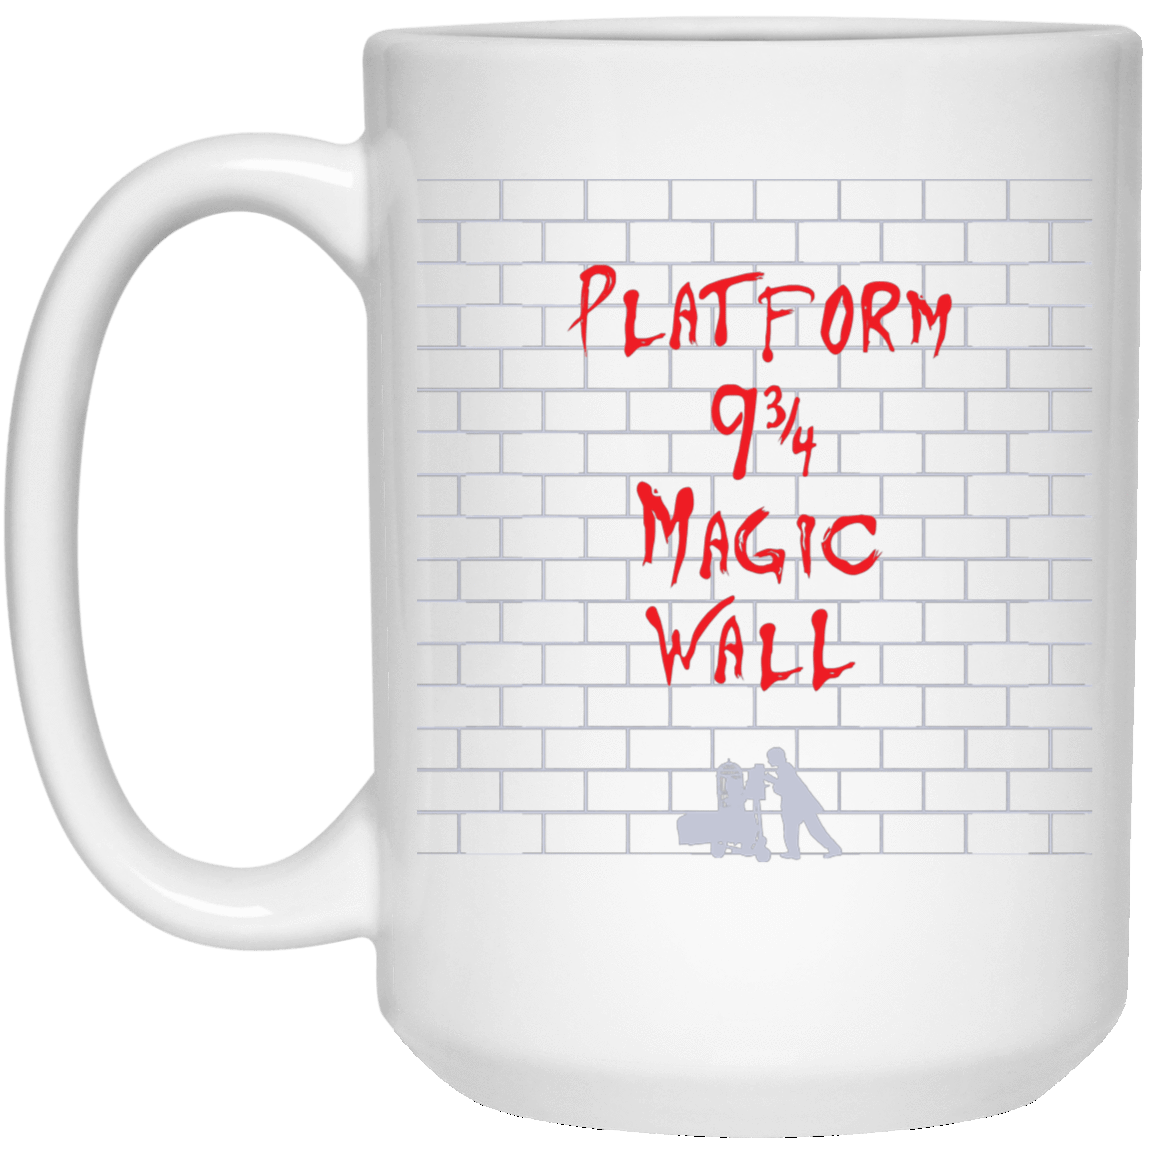 Drinkware White / One Size Magic Wall 15oz Mug